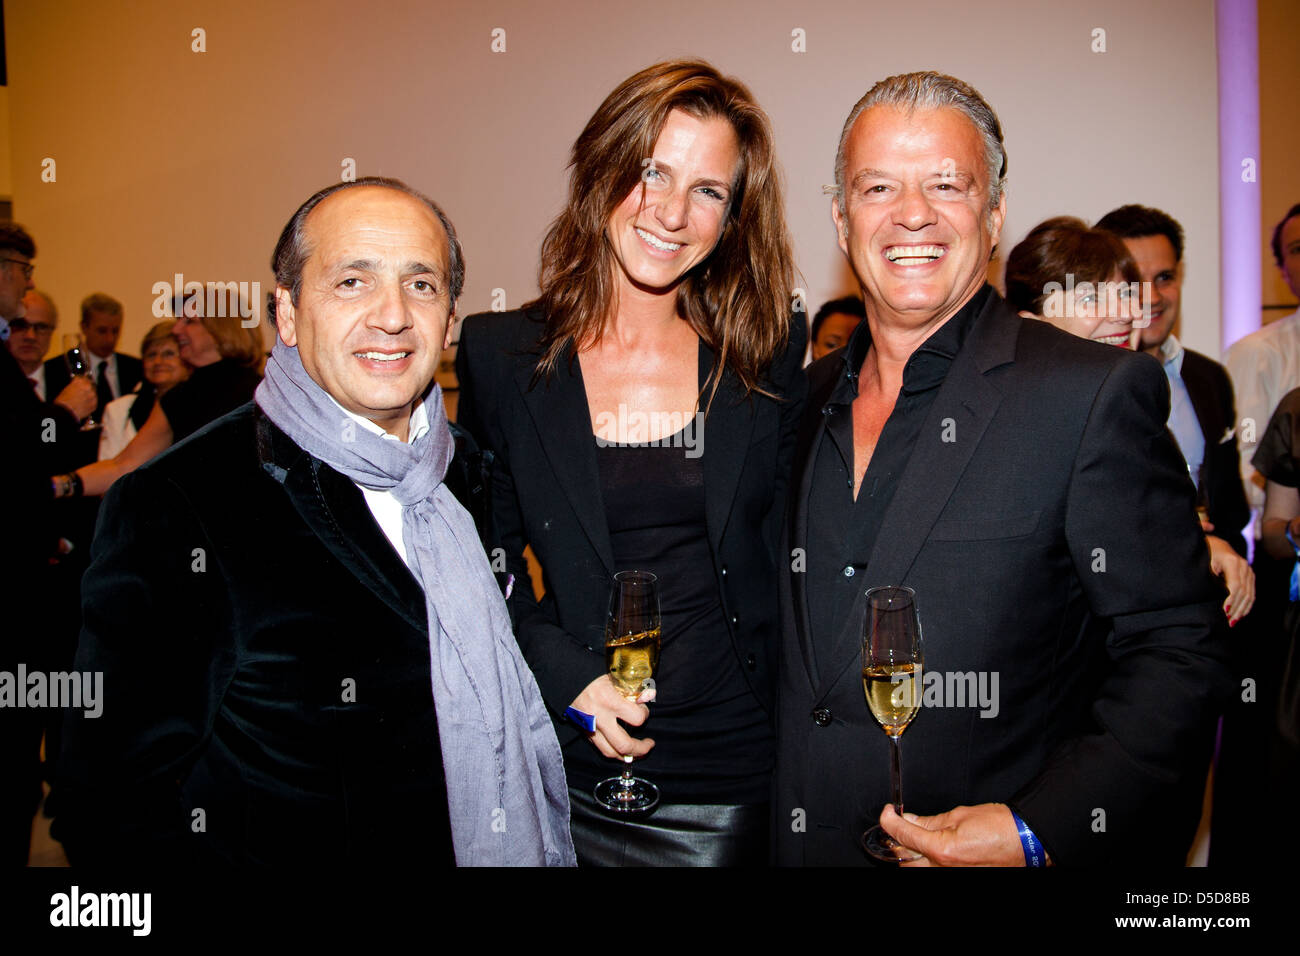 Hadi Teherani, Nora Kutschera e Michael Rosenblat al lancio di "Arte Zeiss Kalender 2012" in occasione di una cena di gala al Haus der Foto Stock